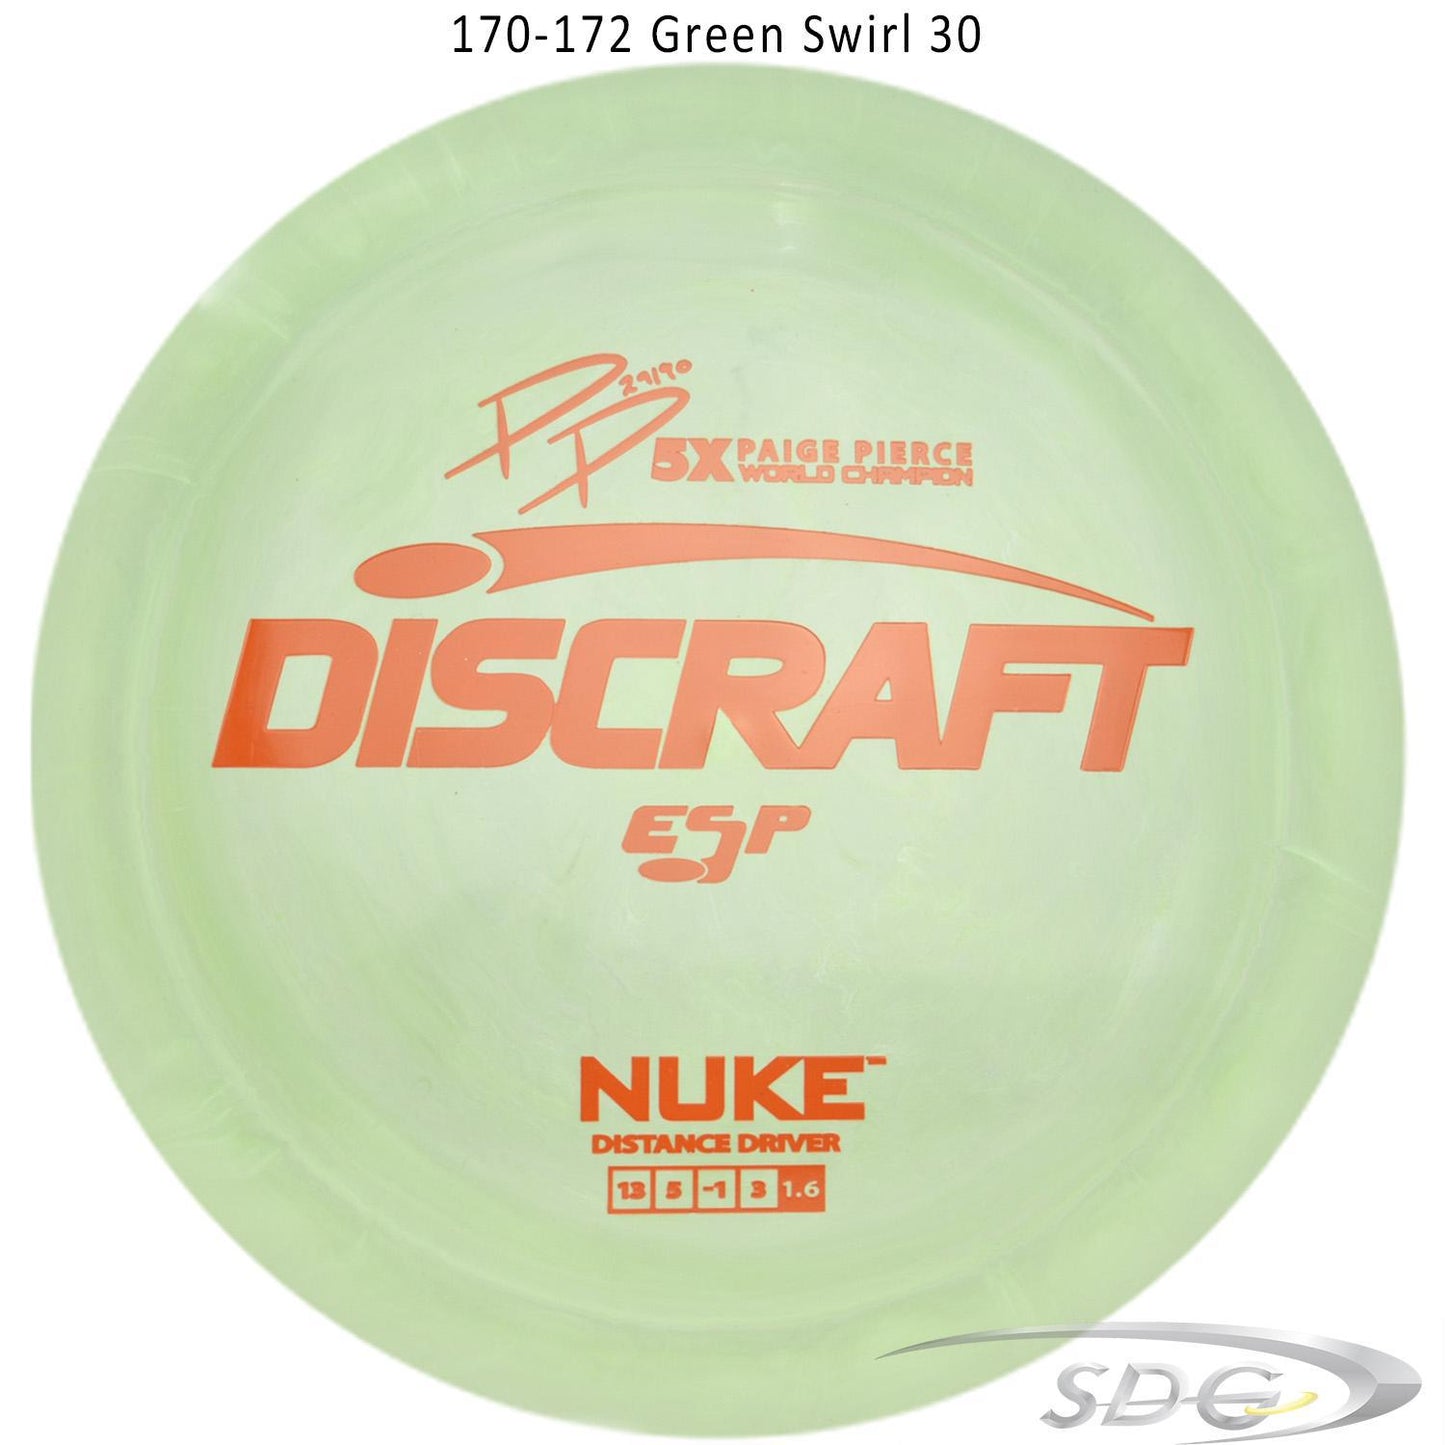 discraft-esp-nuke-paige-pierce-signature-disc-golf-distance-driver-172-170-weights 170-172 Green Swirl 30 